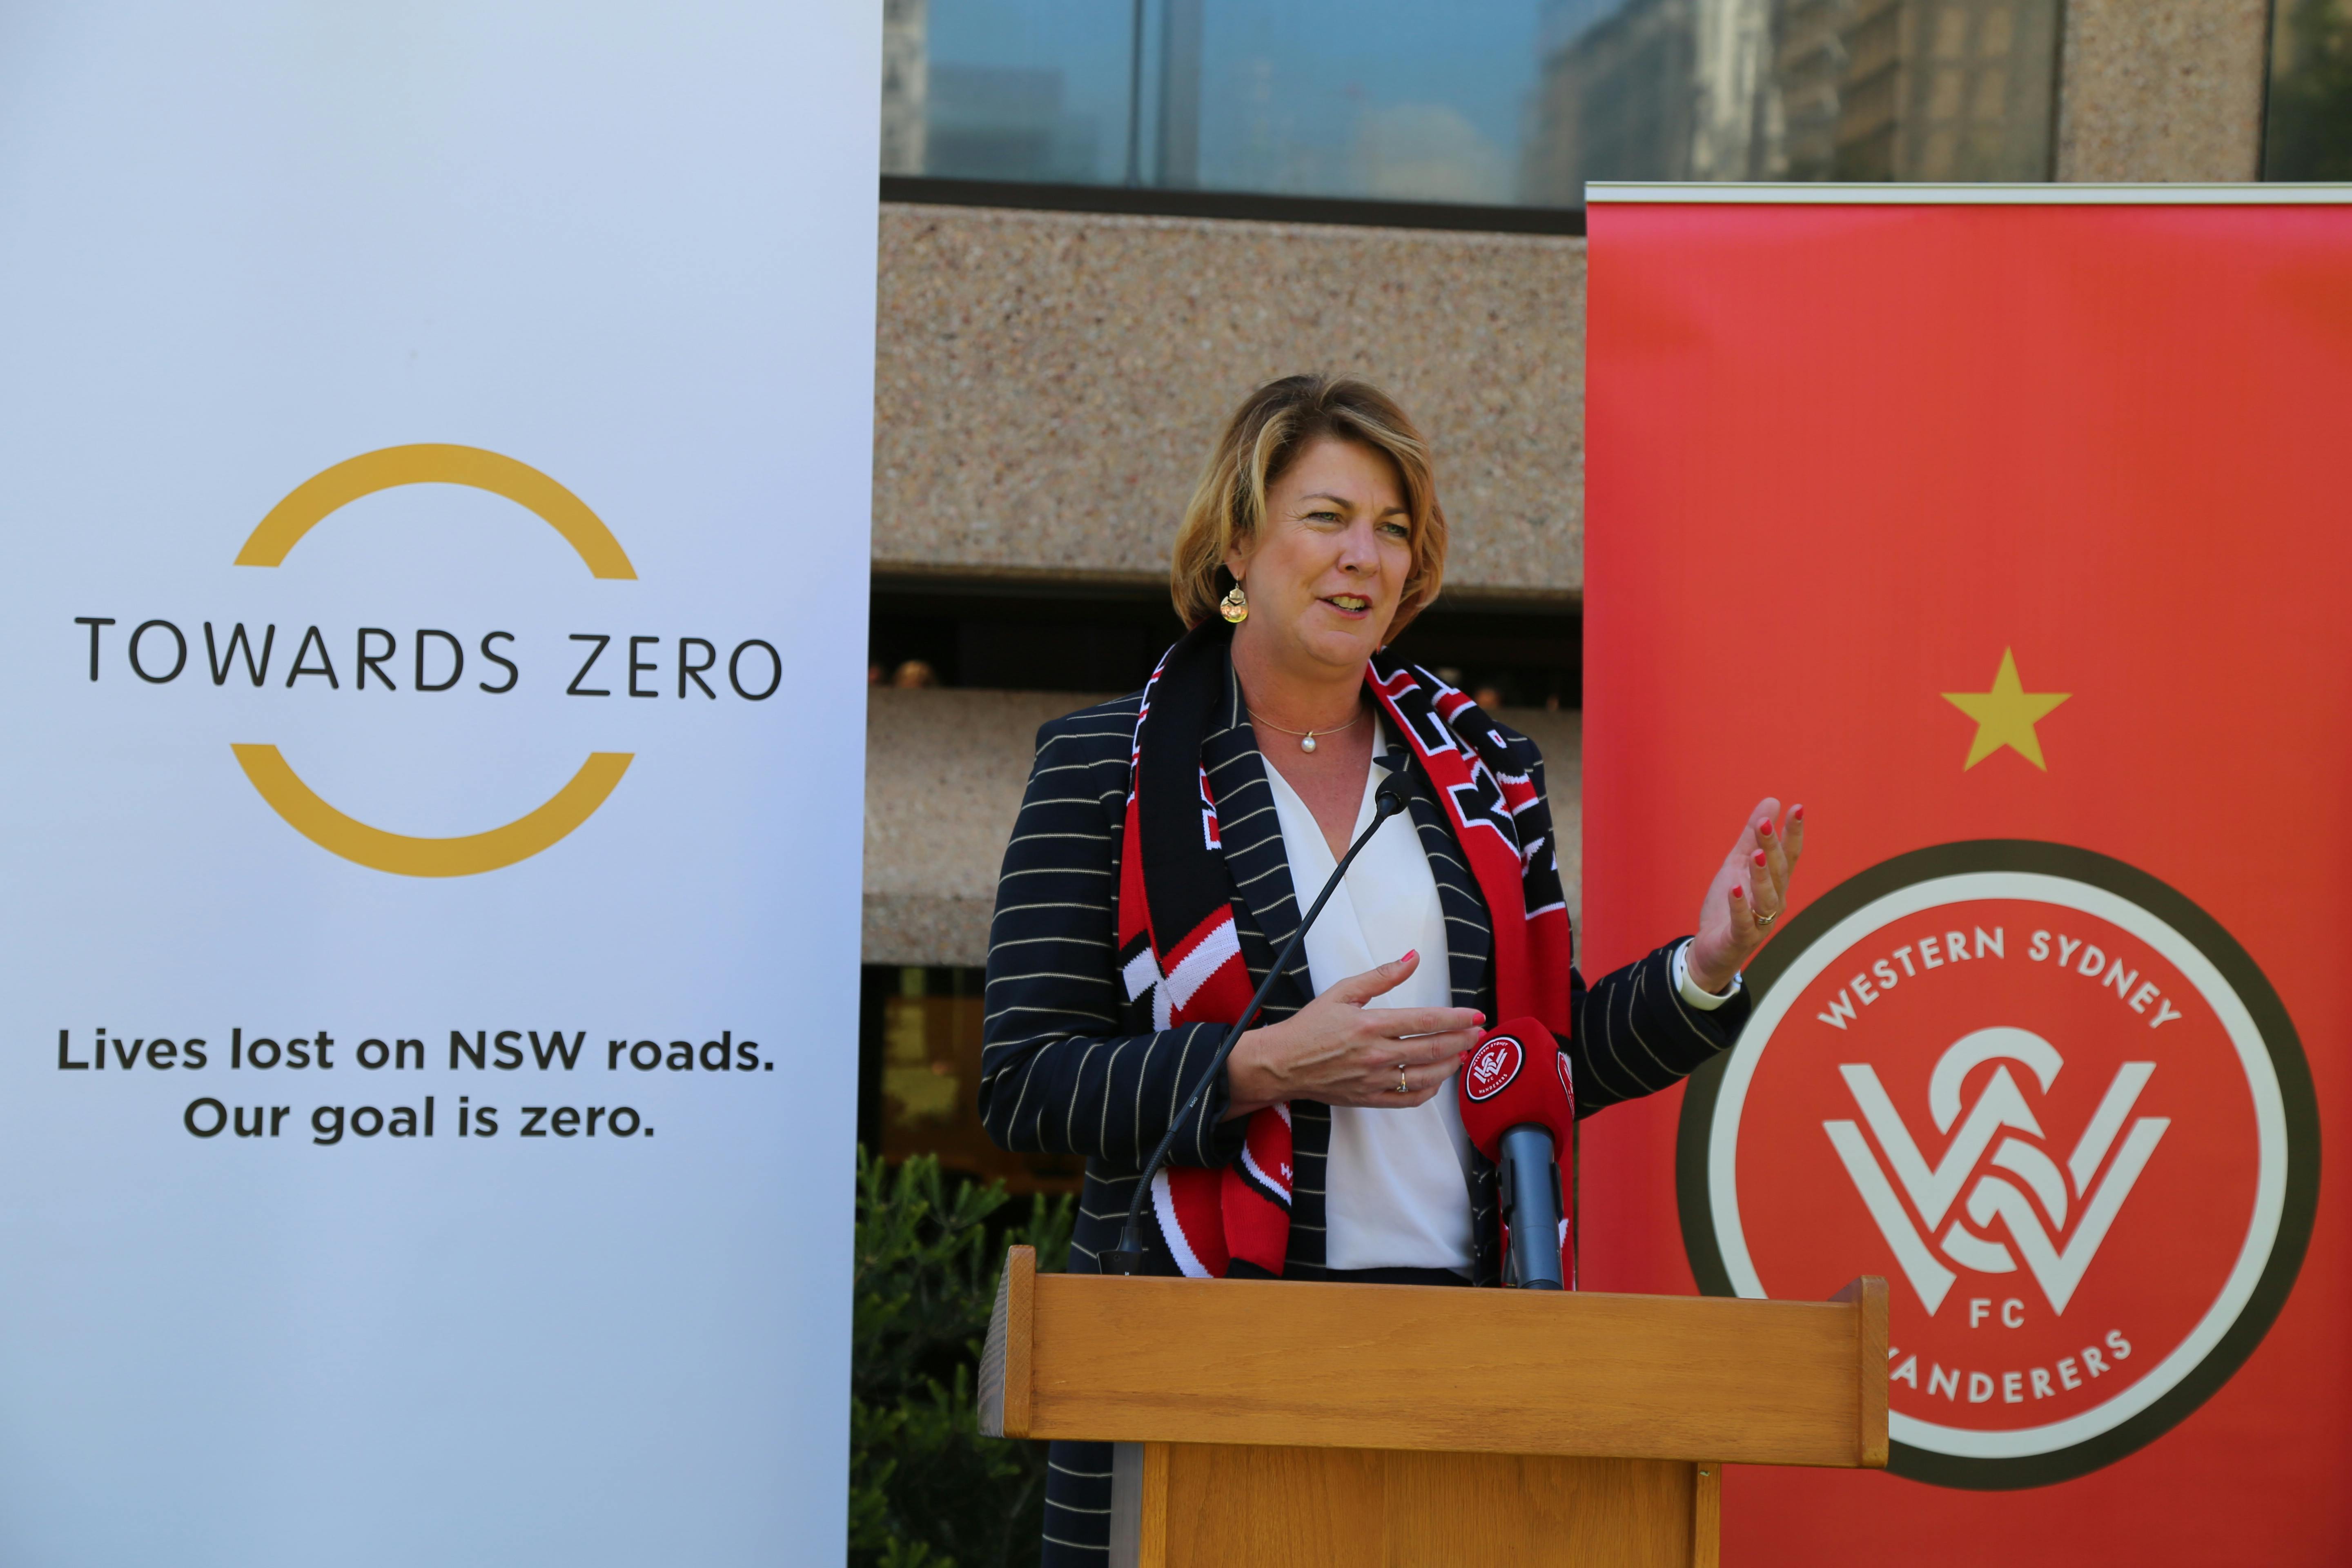 Towards Zero partnership with the Western Sydney Wanderers